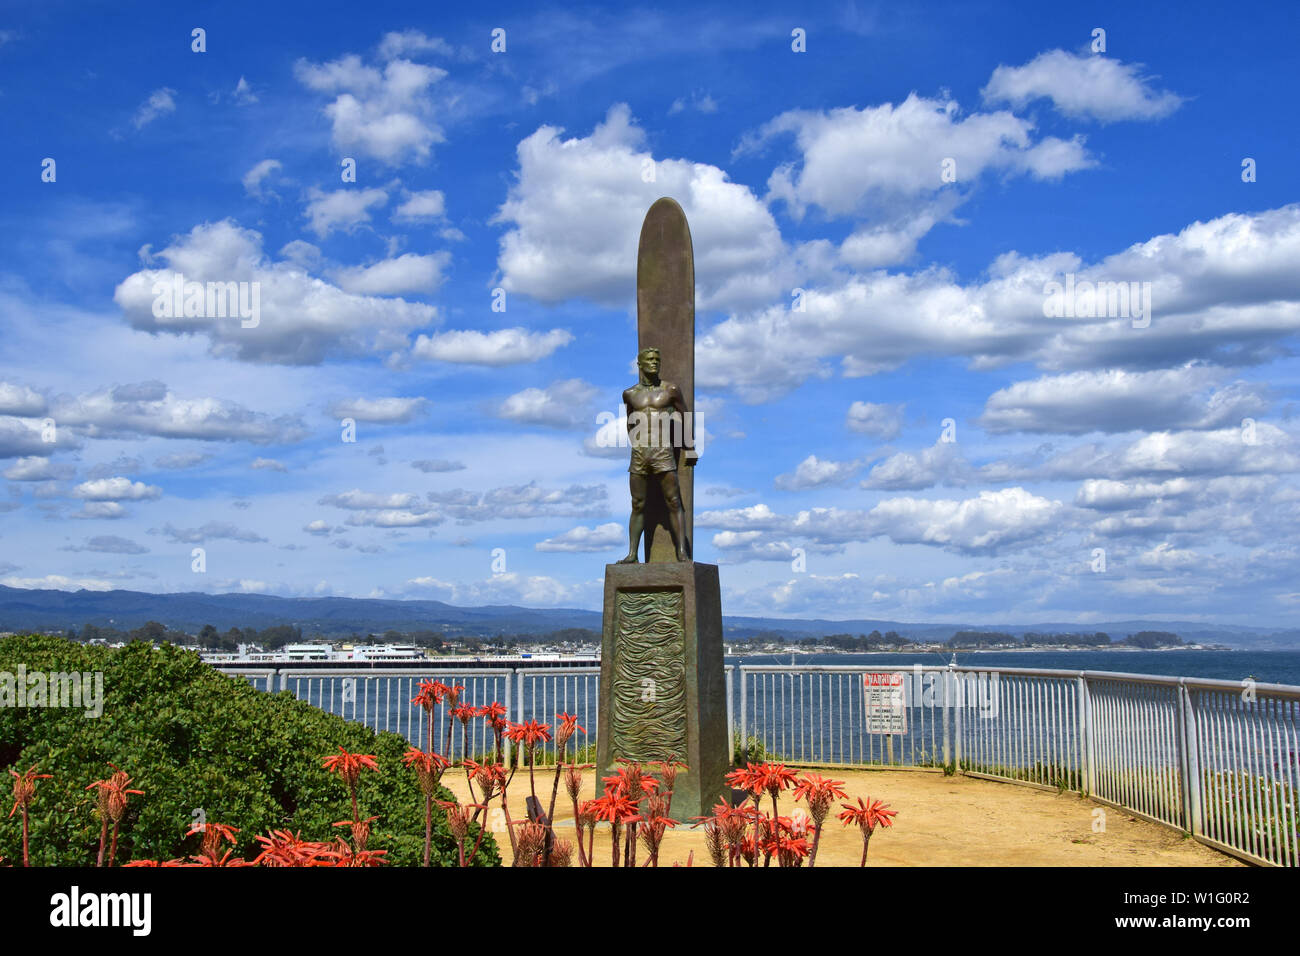 Surfer Statue in Santa Cruz, California Stock Photo